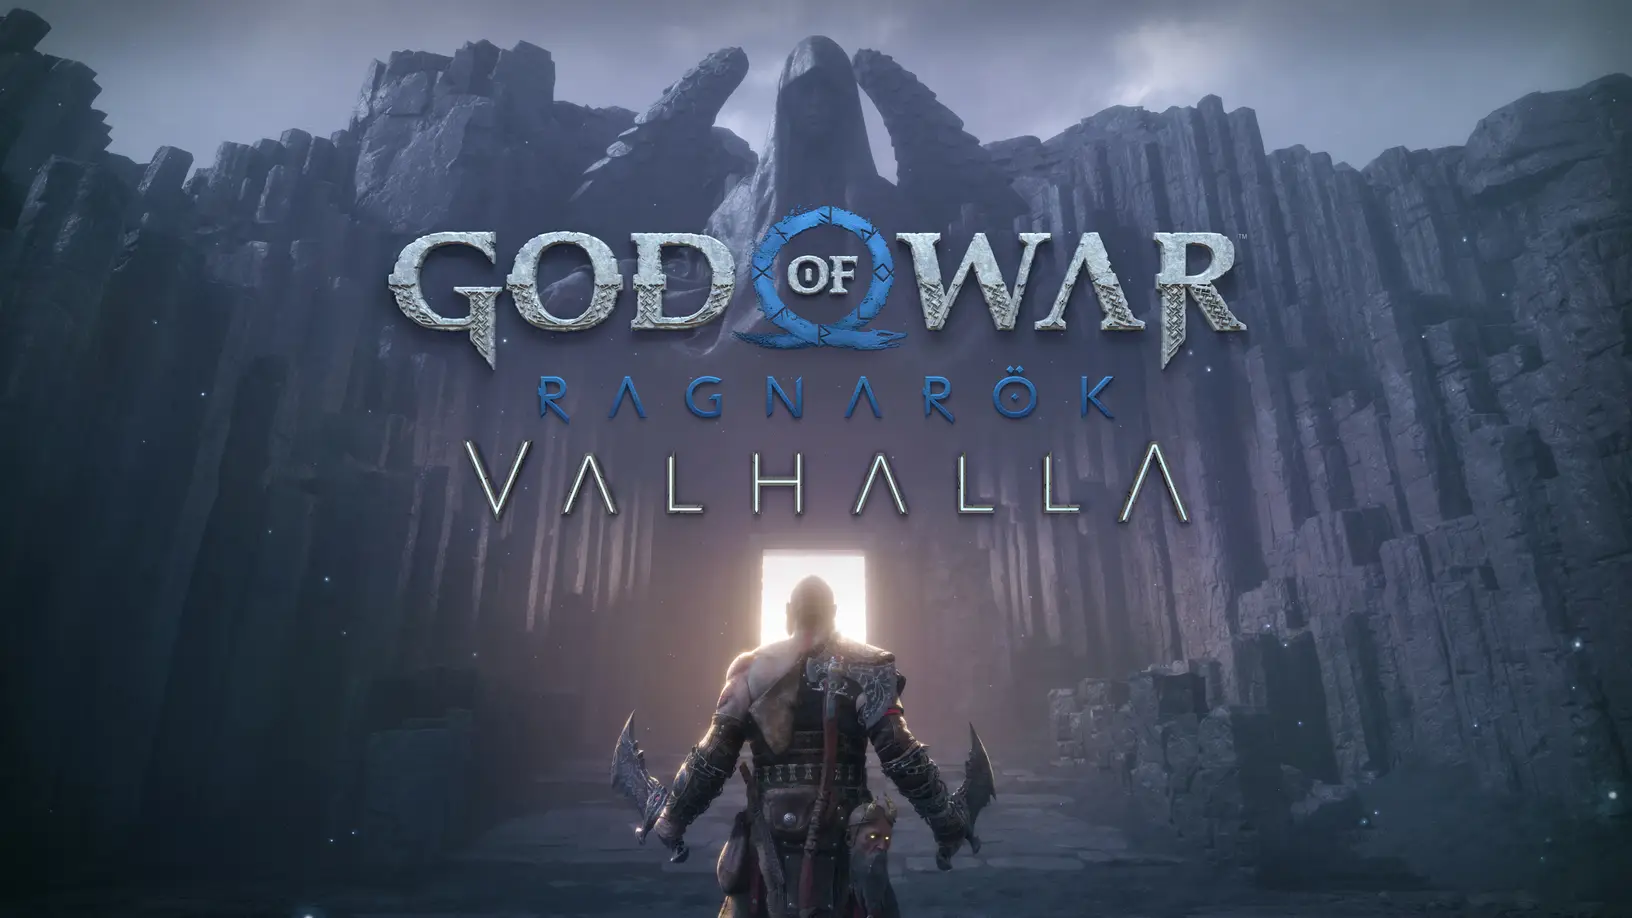 God of War Ragnarök Valhalla Free DLC Now Available